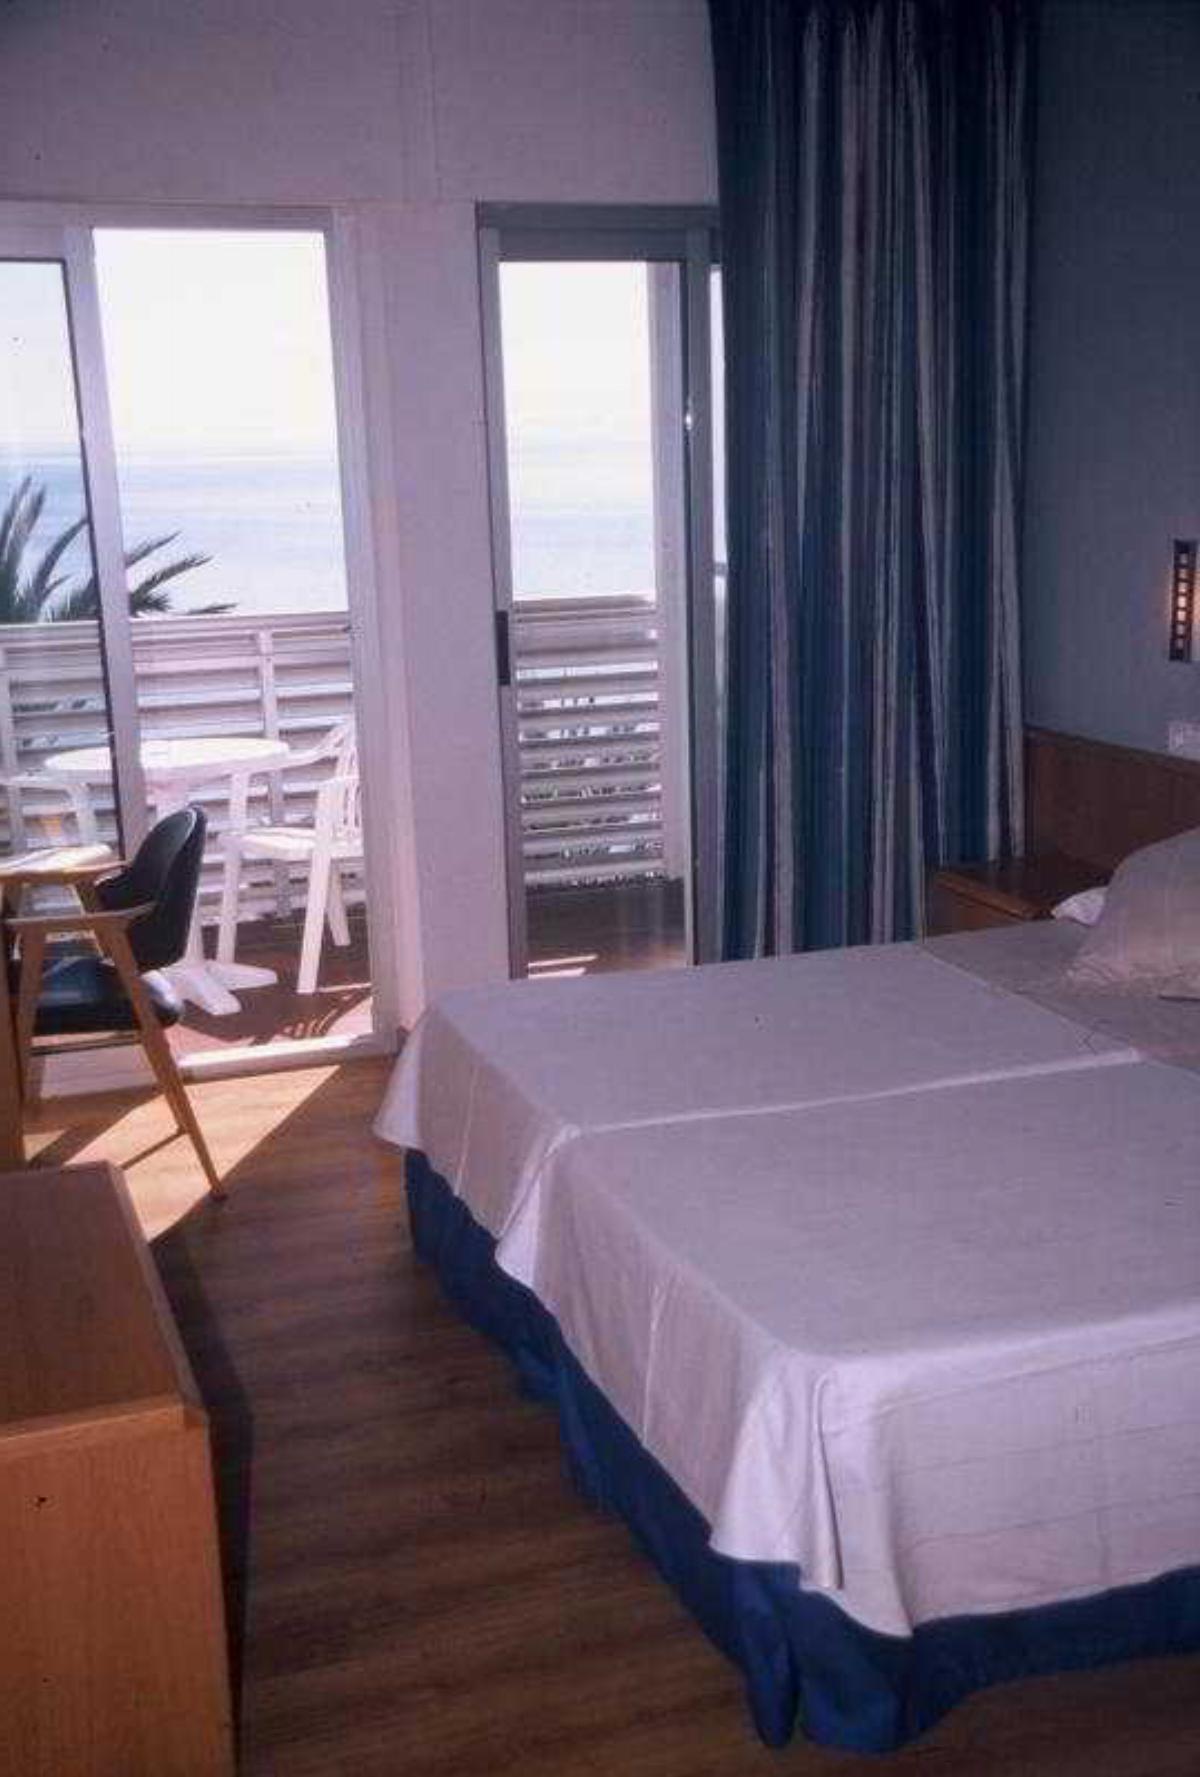 Best Western Hotel Neptuno Hotel La Manga - Costa Calida Spain